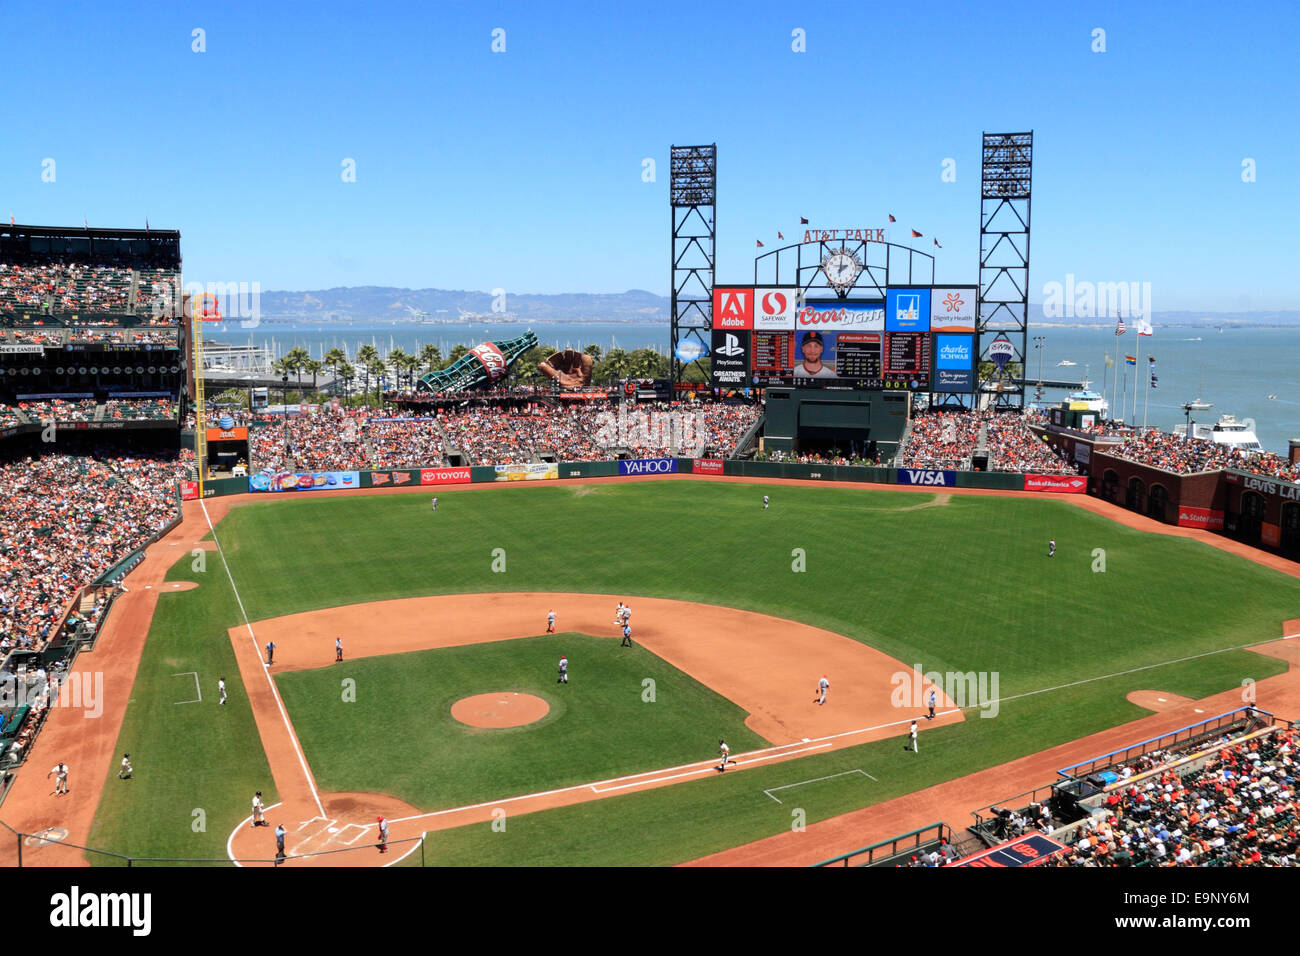 AT & T Park Baseball-Stadion, San Francisco Giants Spiel, San Francisco,  Kalifornien, USA Stockfotografie - Alamy